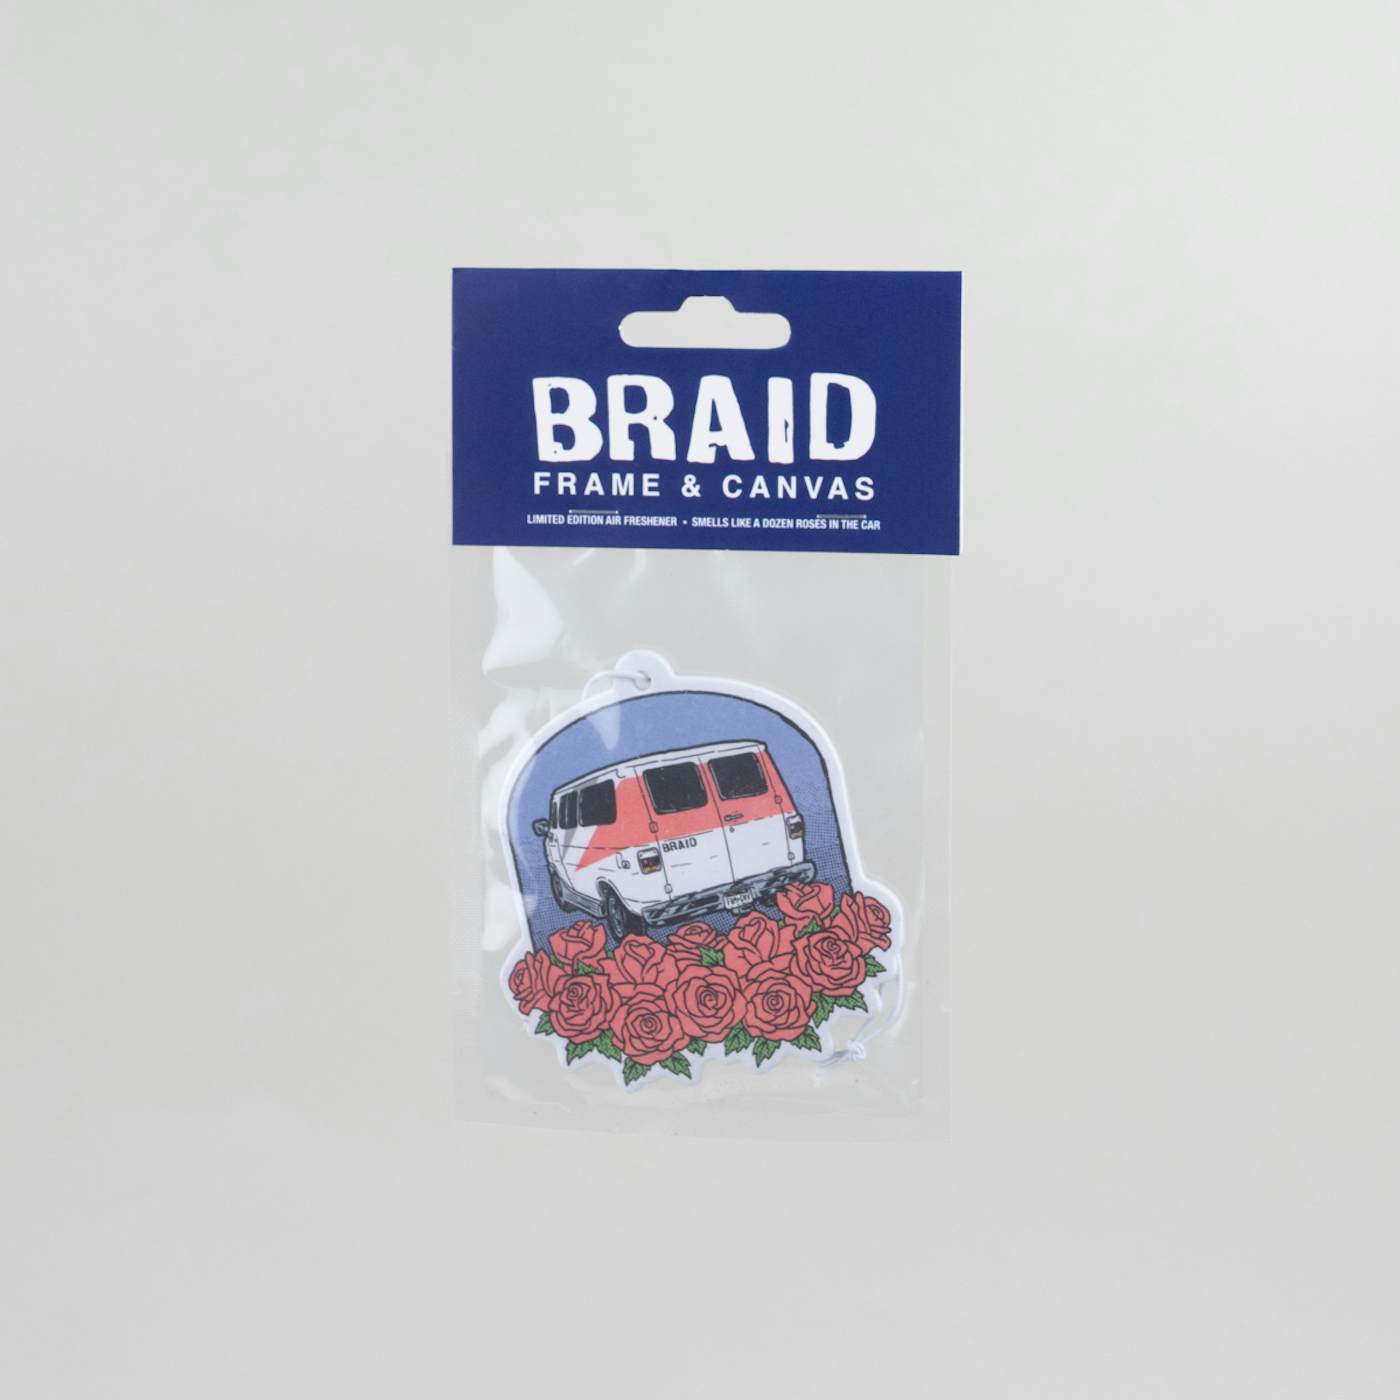 Braid “A Dozen Roses” Air Freshener